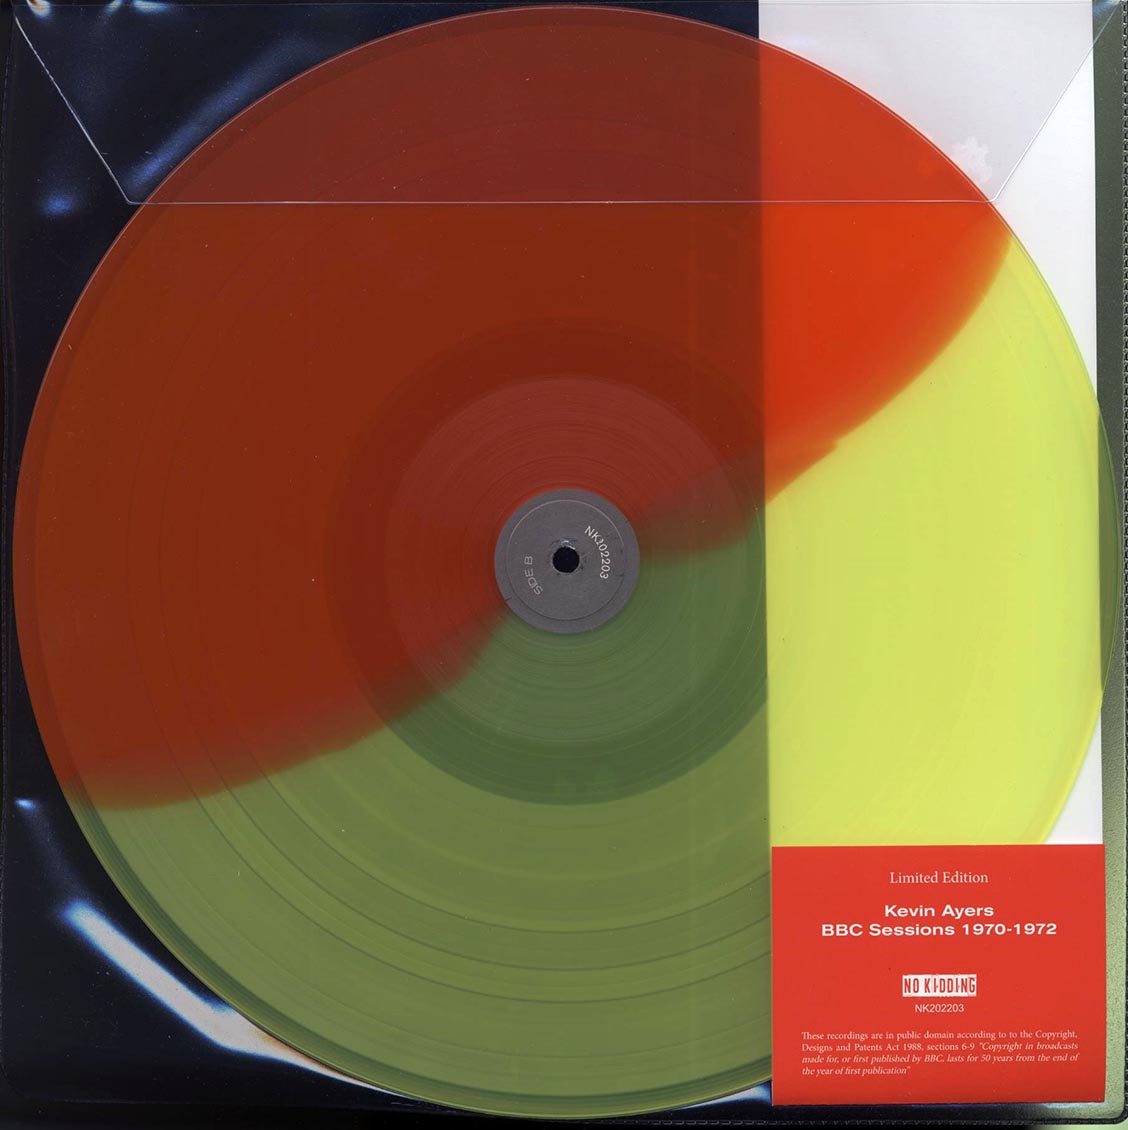 Kevin Ayers - BBC Sessions 1970-1972 (ltd. ed.) (colored vinyl) - Vinyl LP, LP